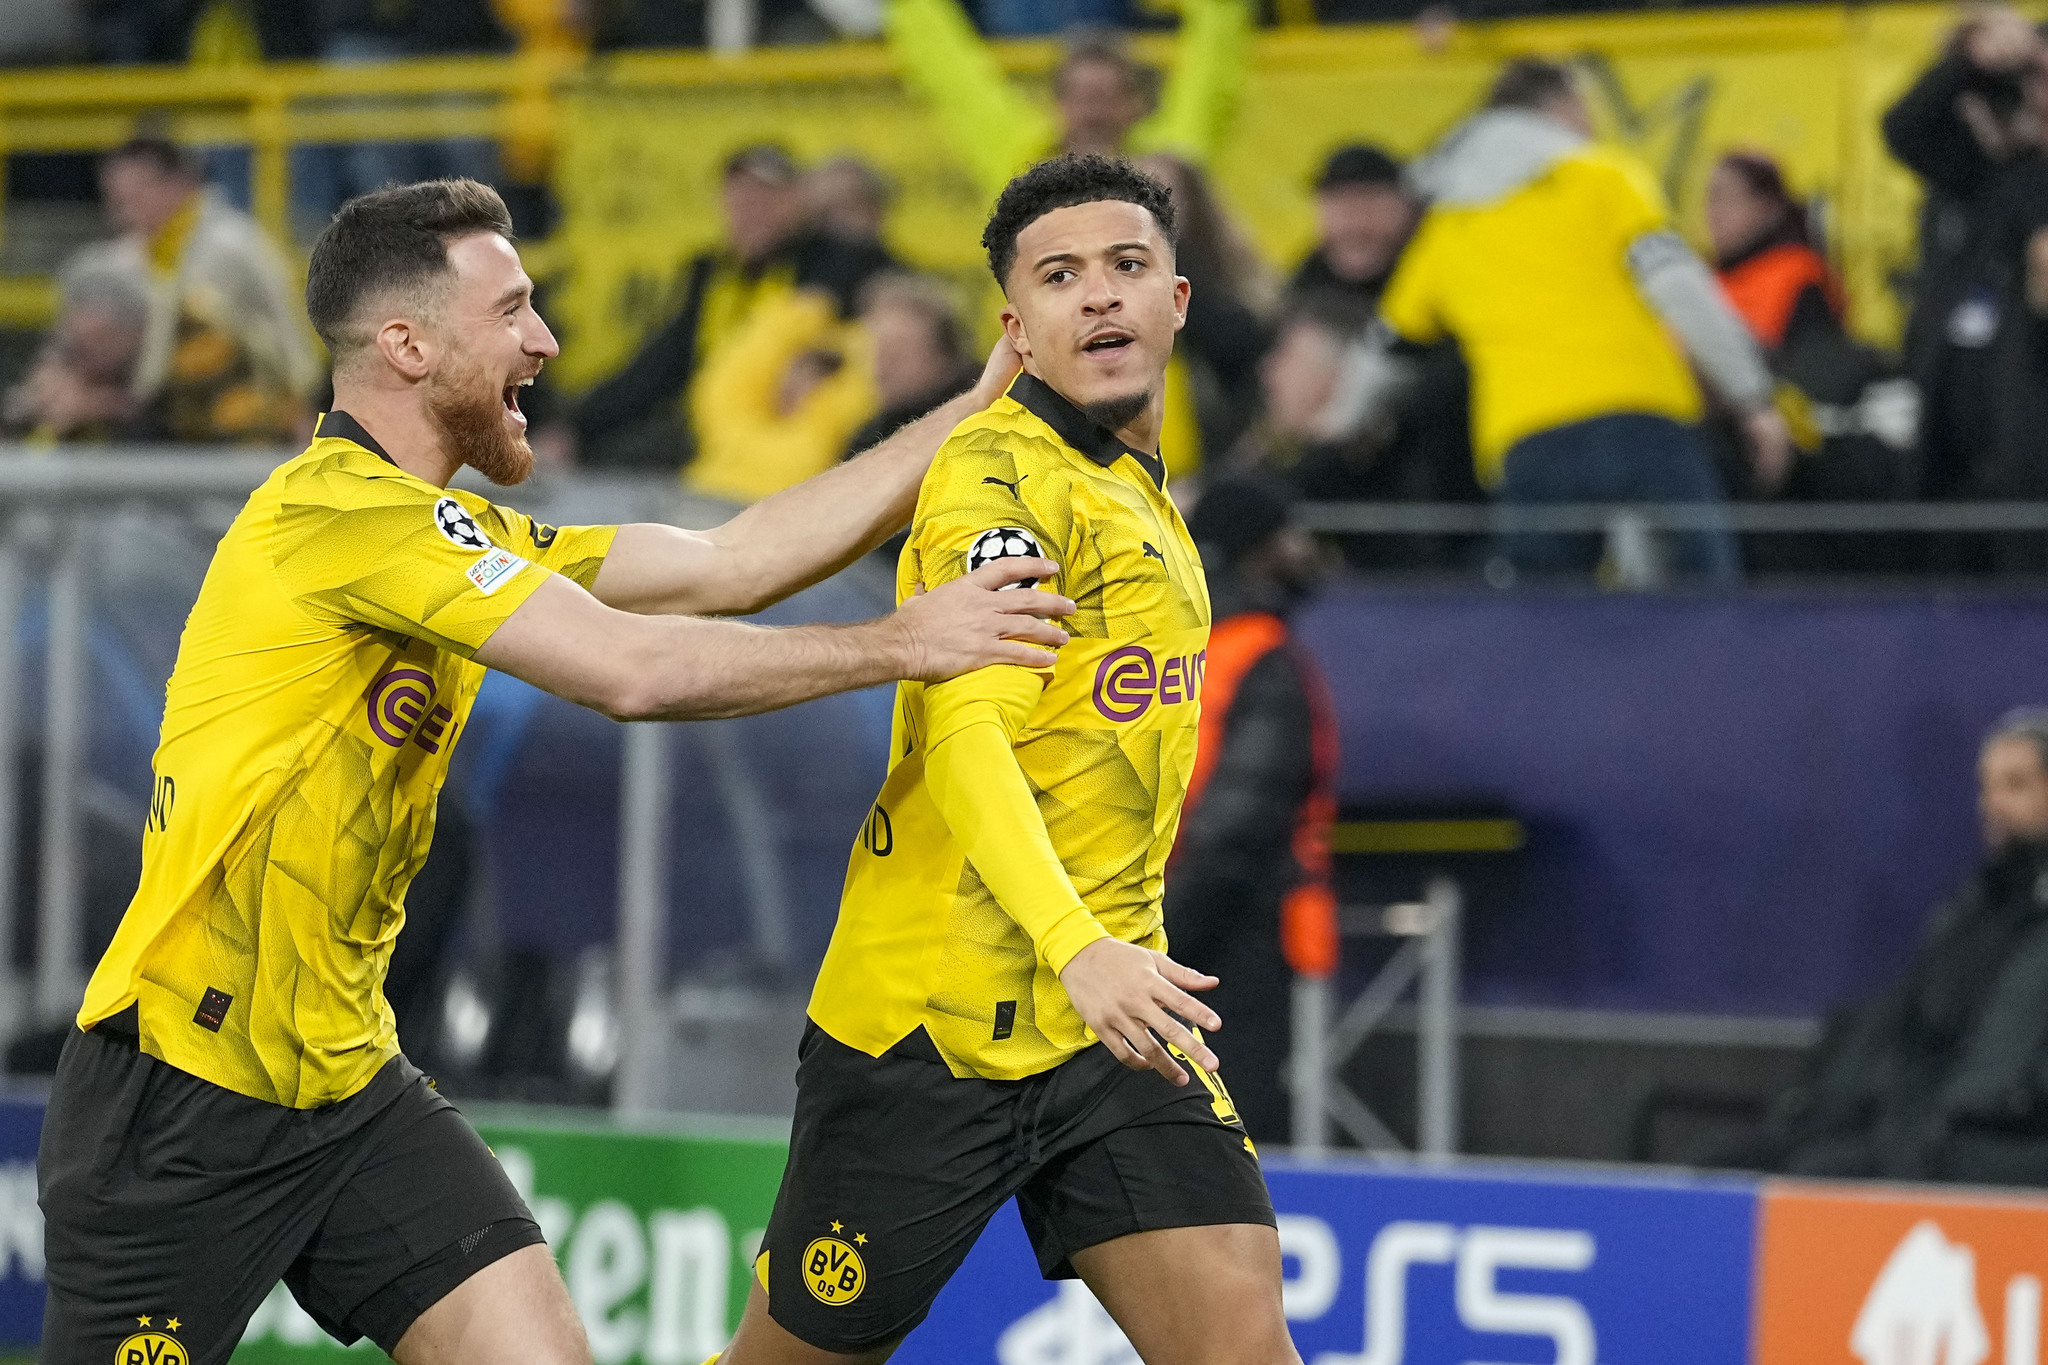 Dortmunds Jadon Sancho, right, celebrates with Dortmunds Salih Ozcan